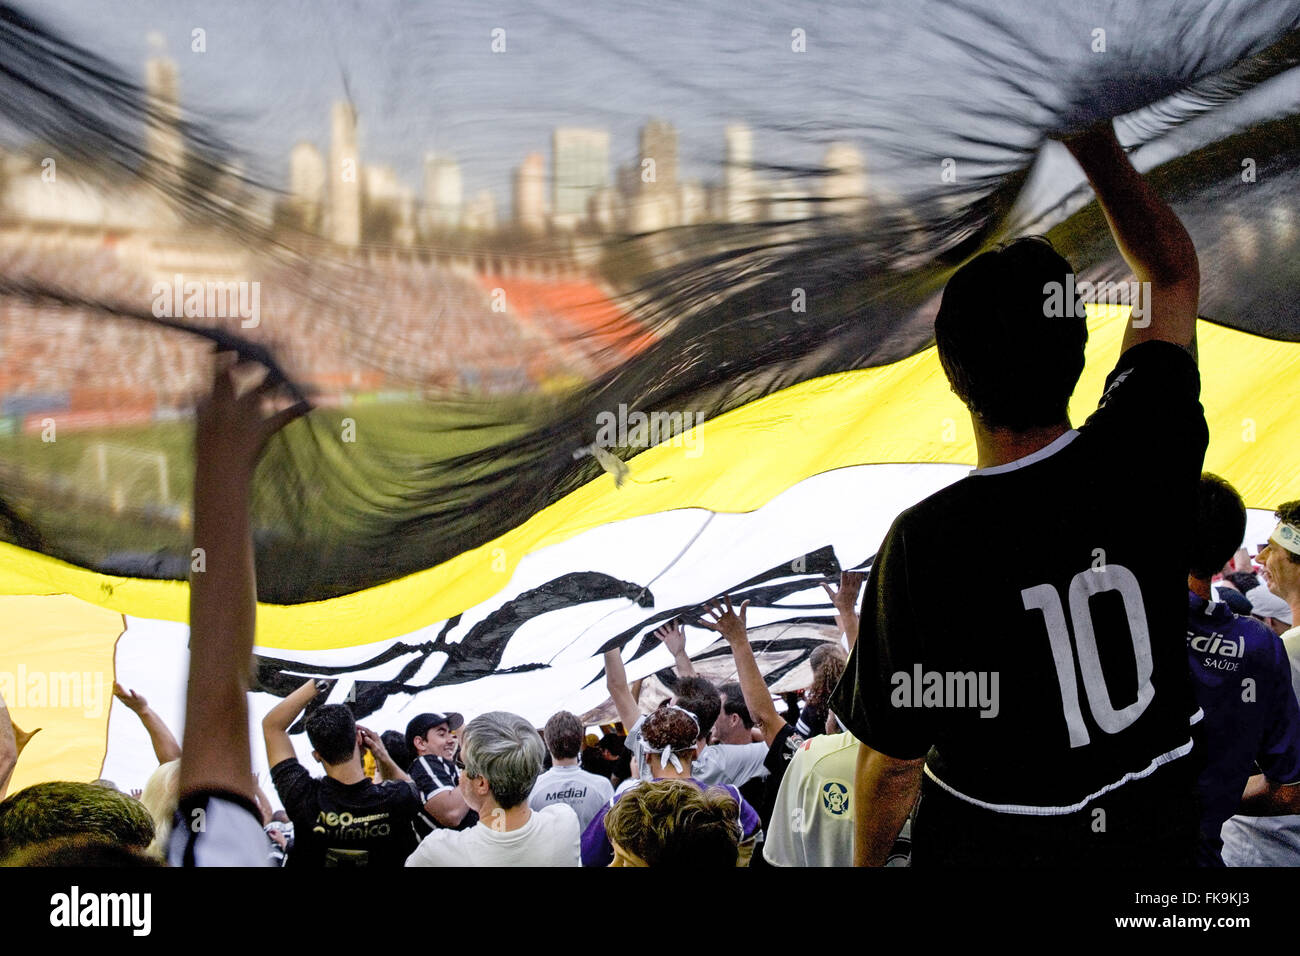 Sport club corinthians paulista fans hi-res stock photography and images -  Alamy